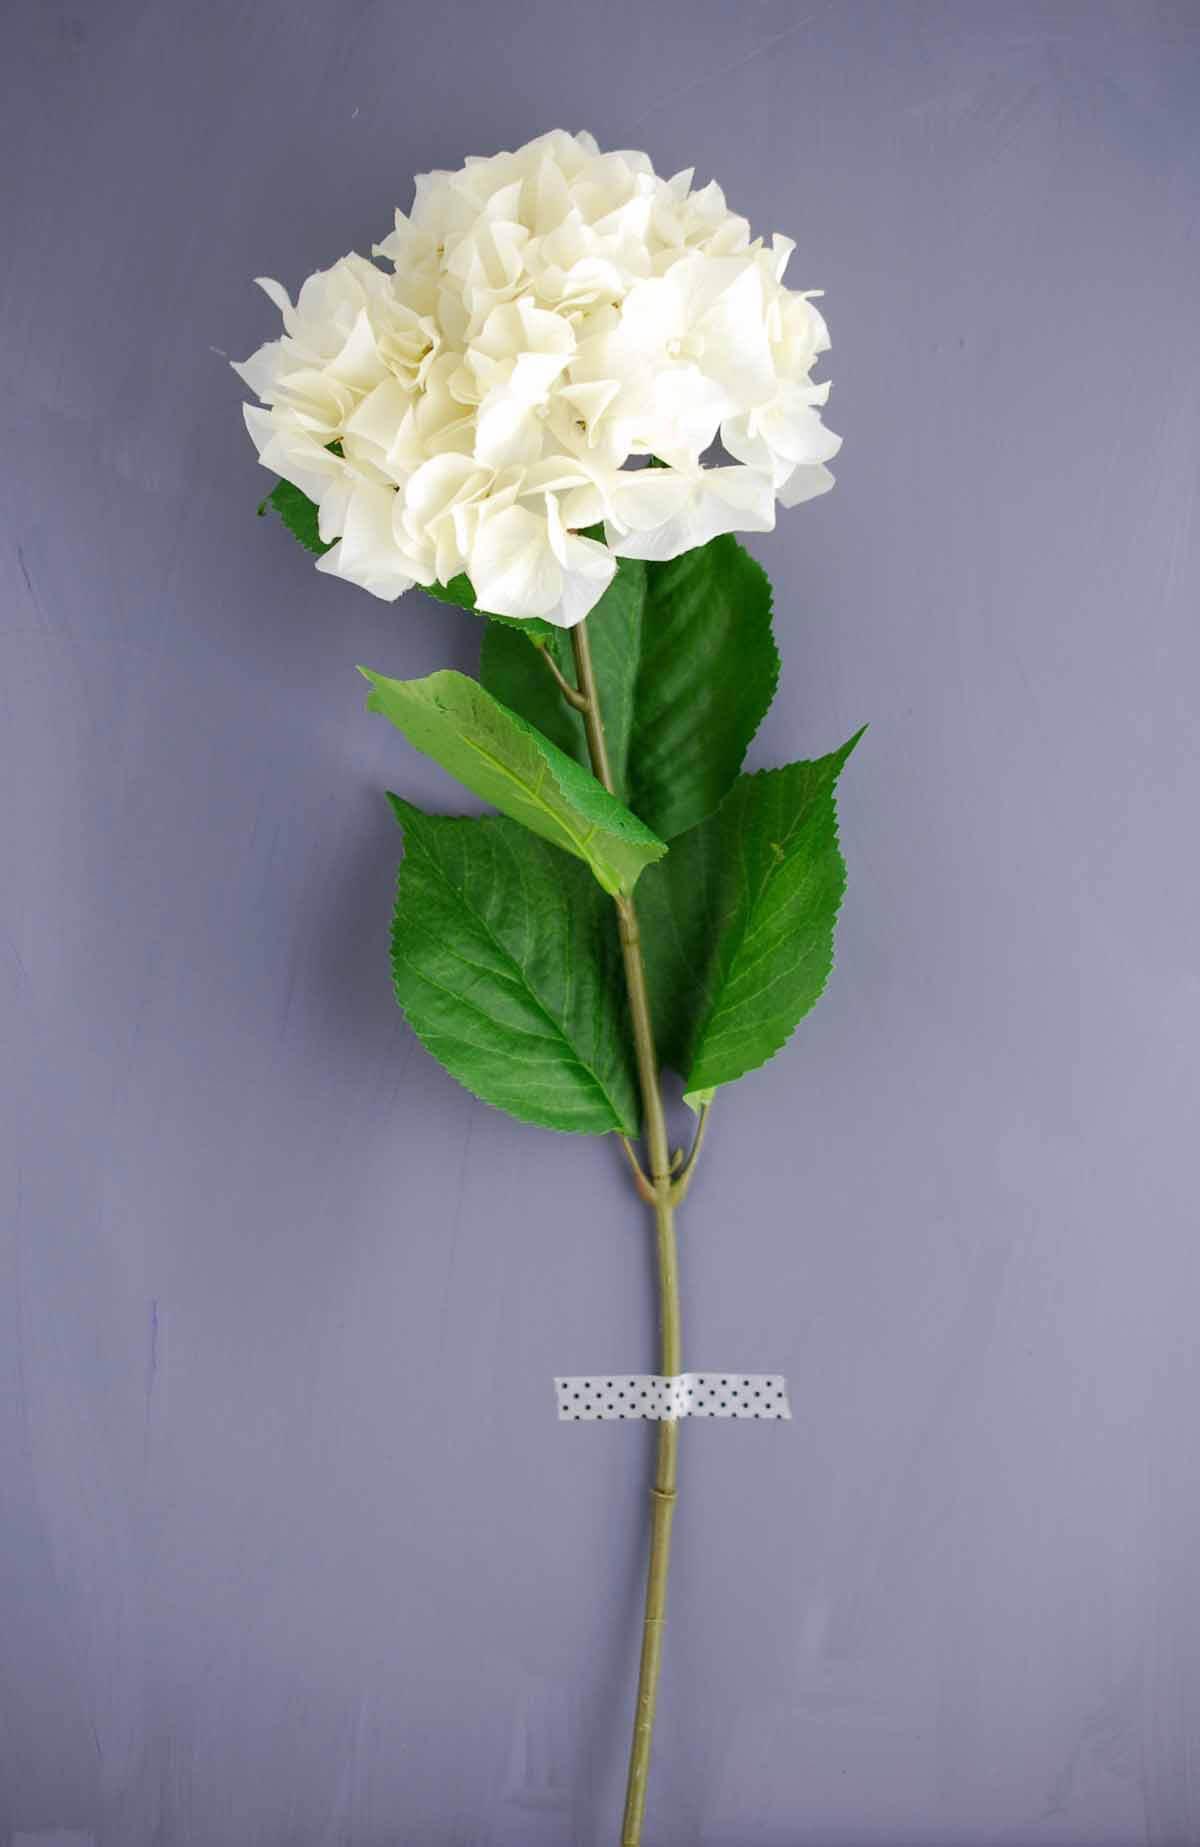 Artificial Ivory White Hydrangea Flowers 7in Bloom